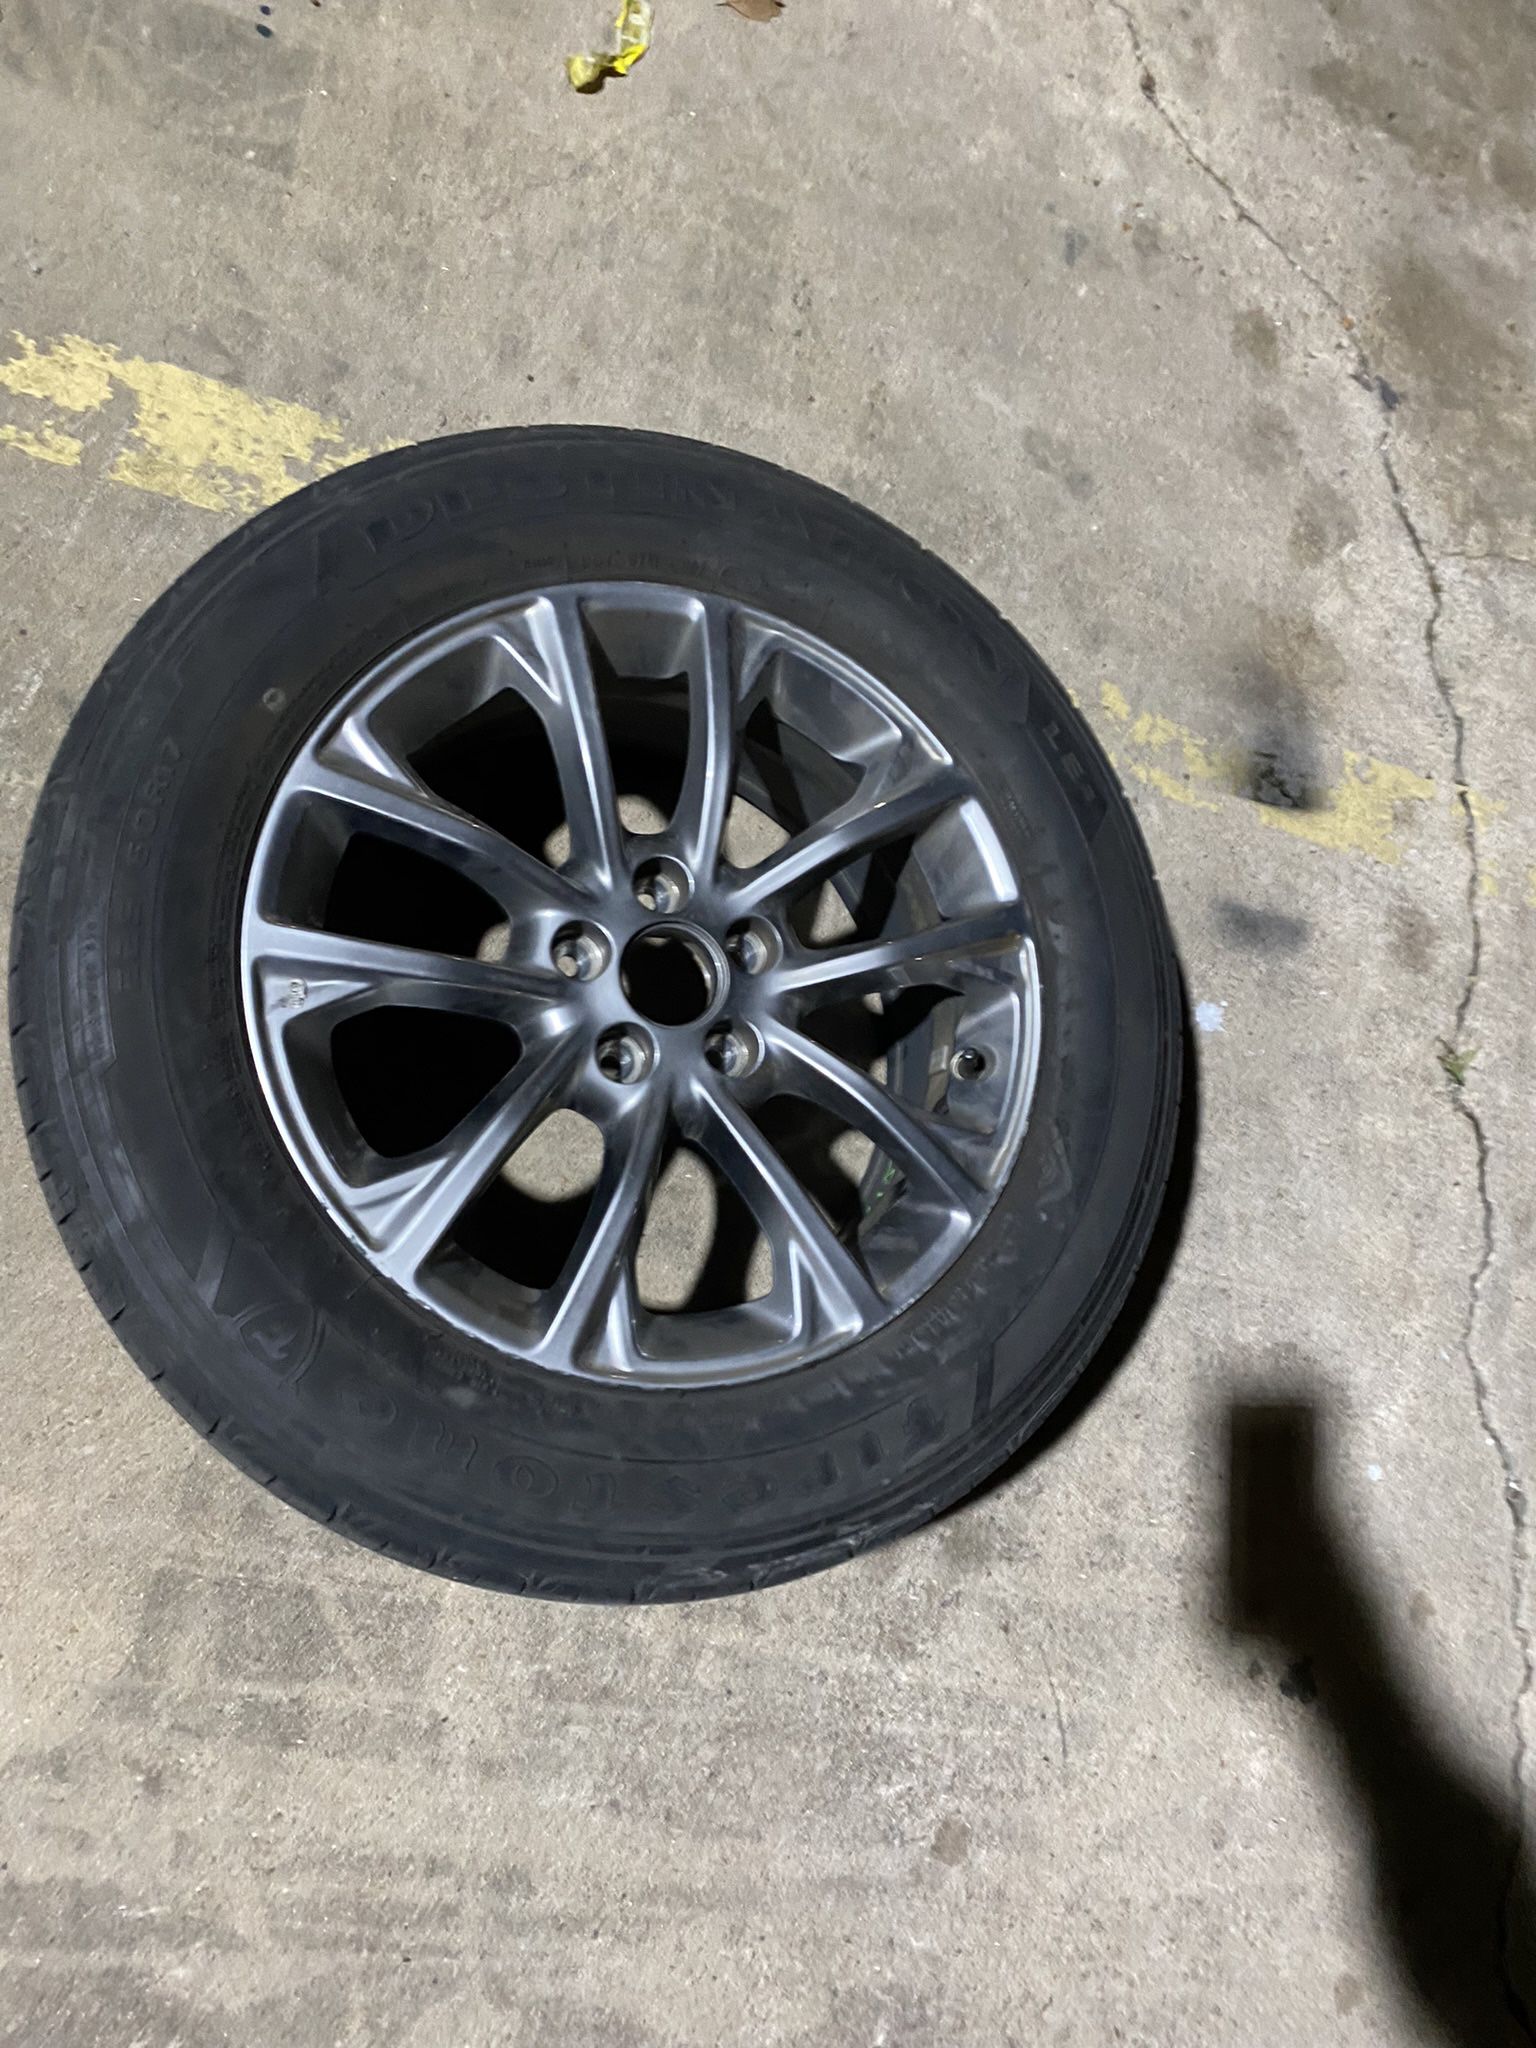 2018 Grand Cherokee Tire And Rim 